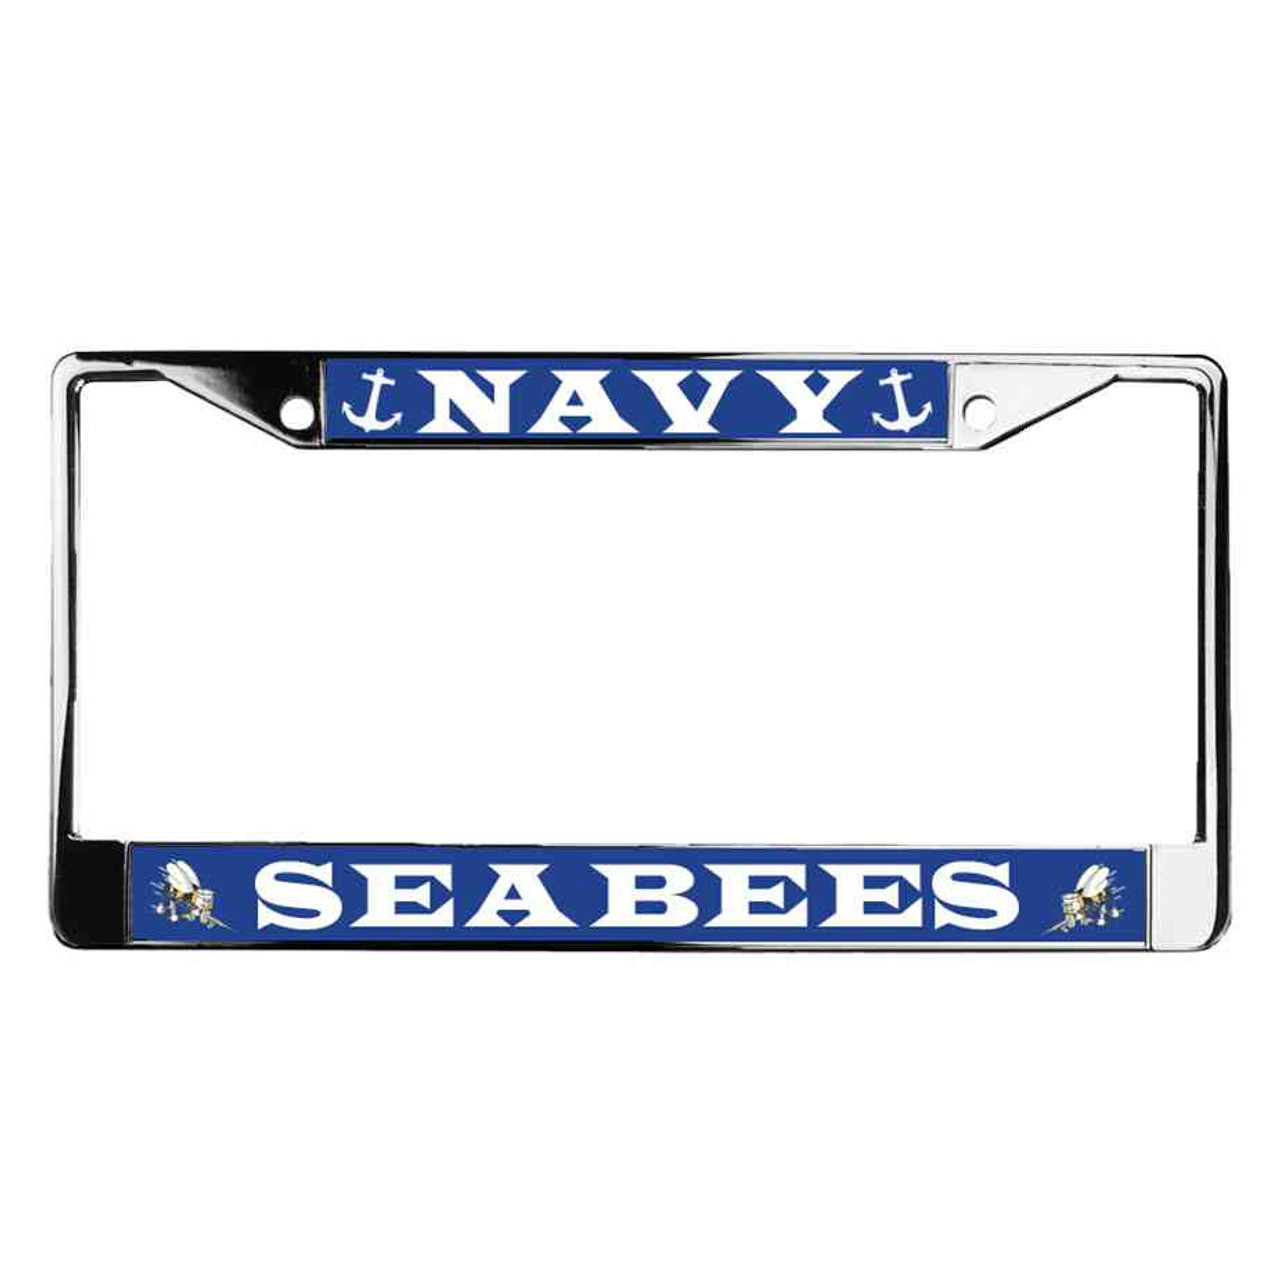 us navy seabees license plate frame